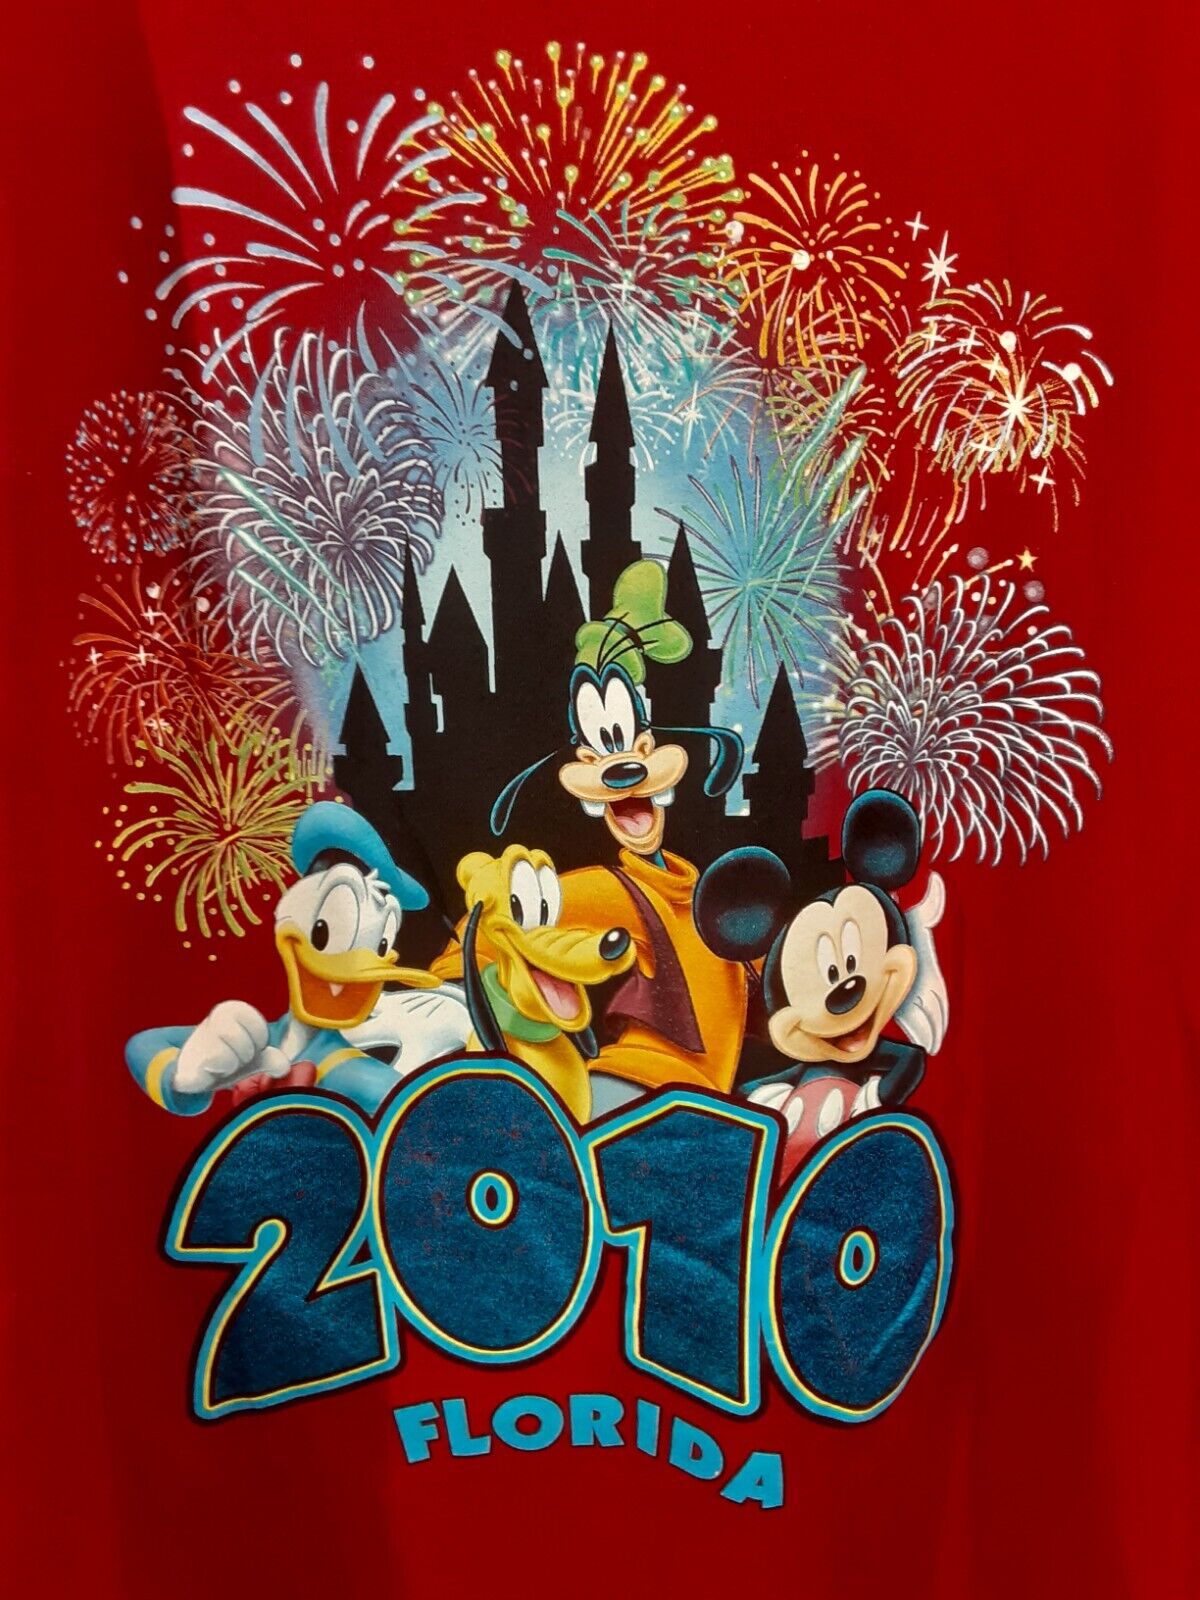 Disney's 2010 Florida T-Shirt Adult Size 3X Red